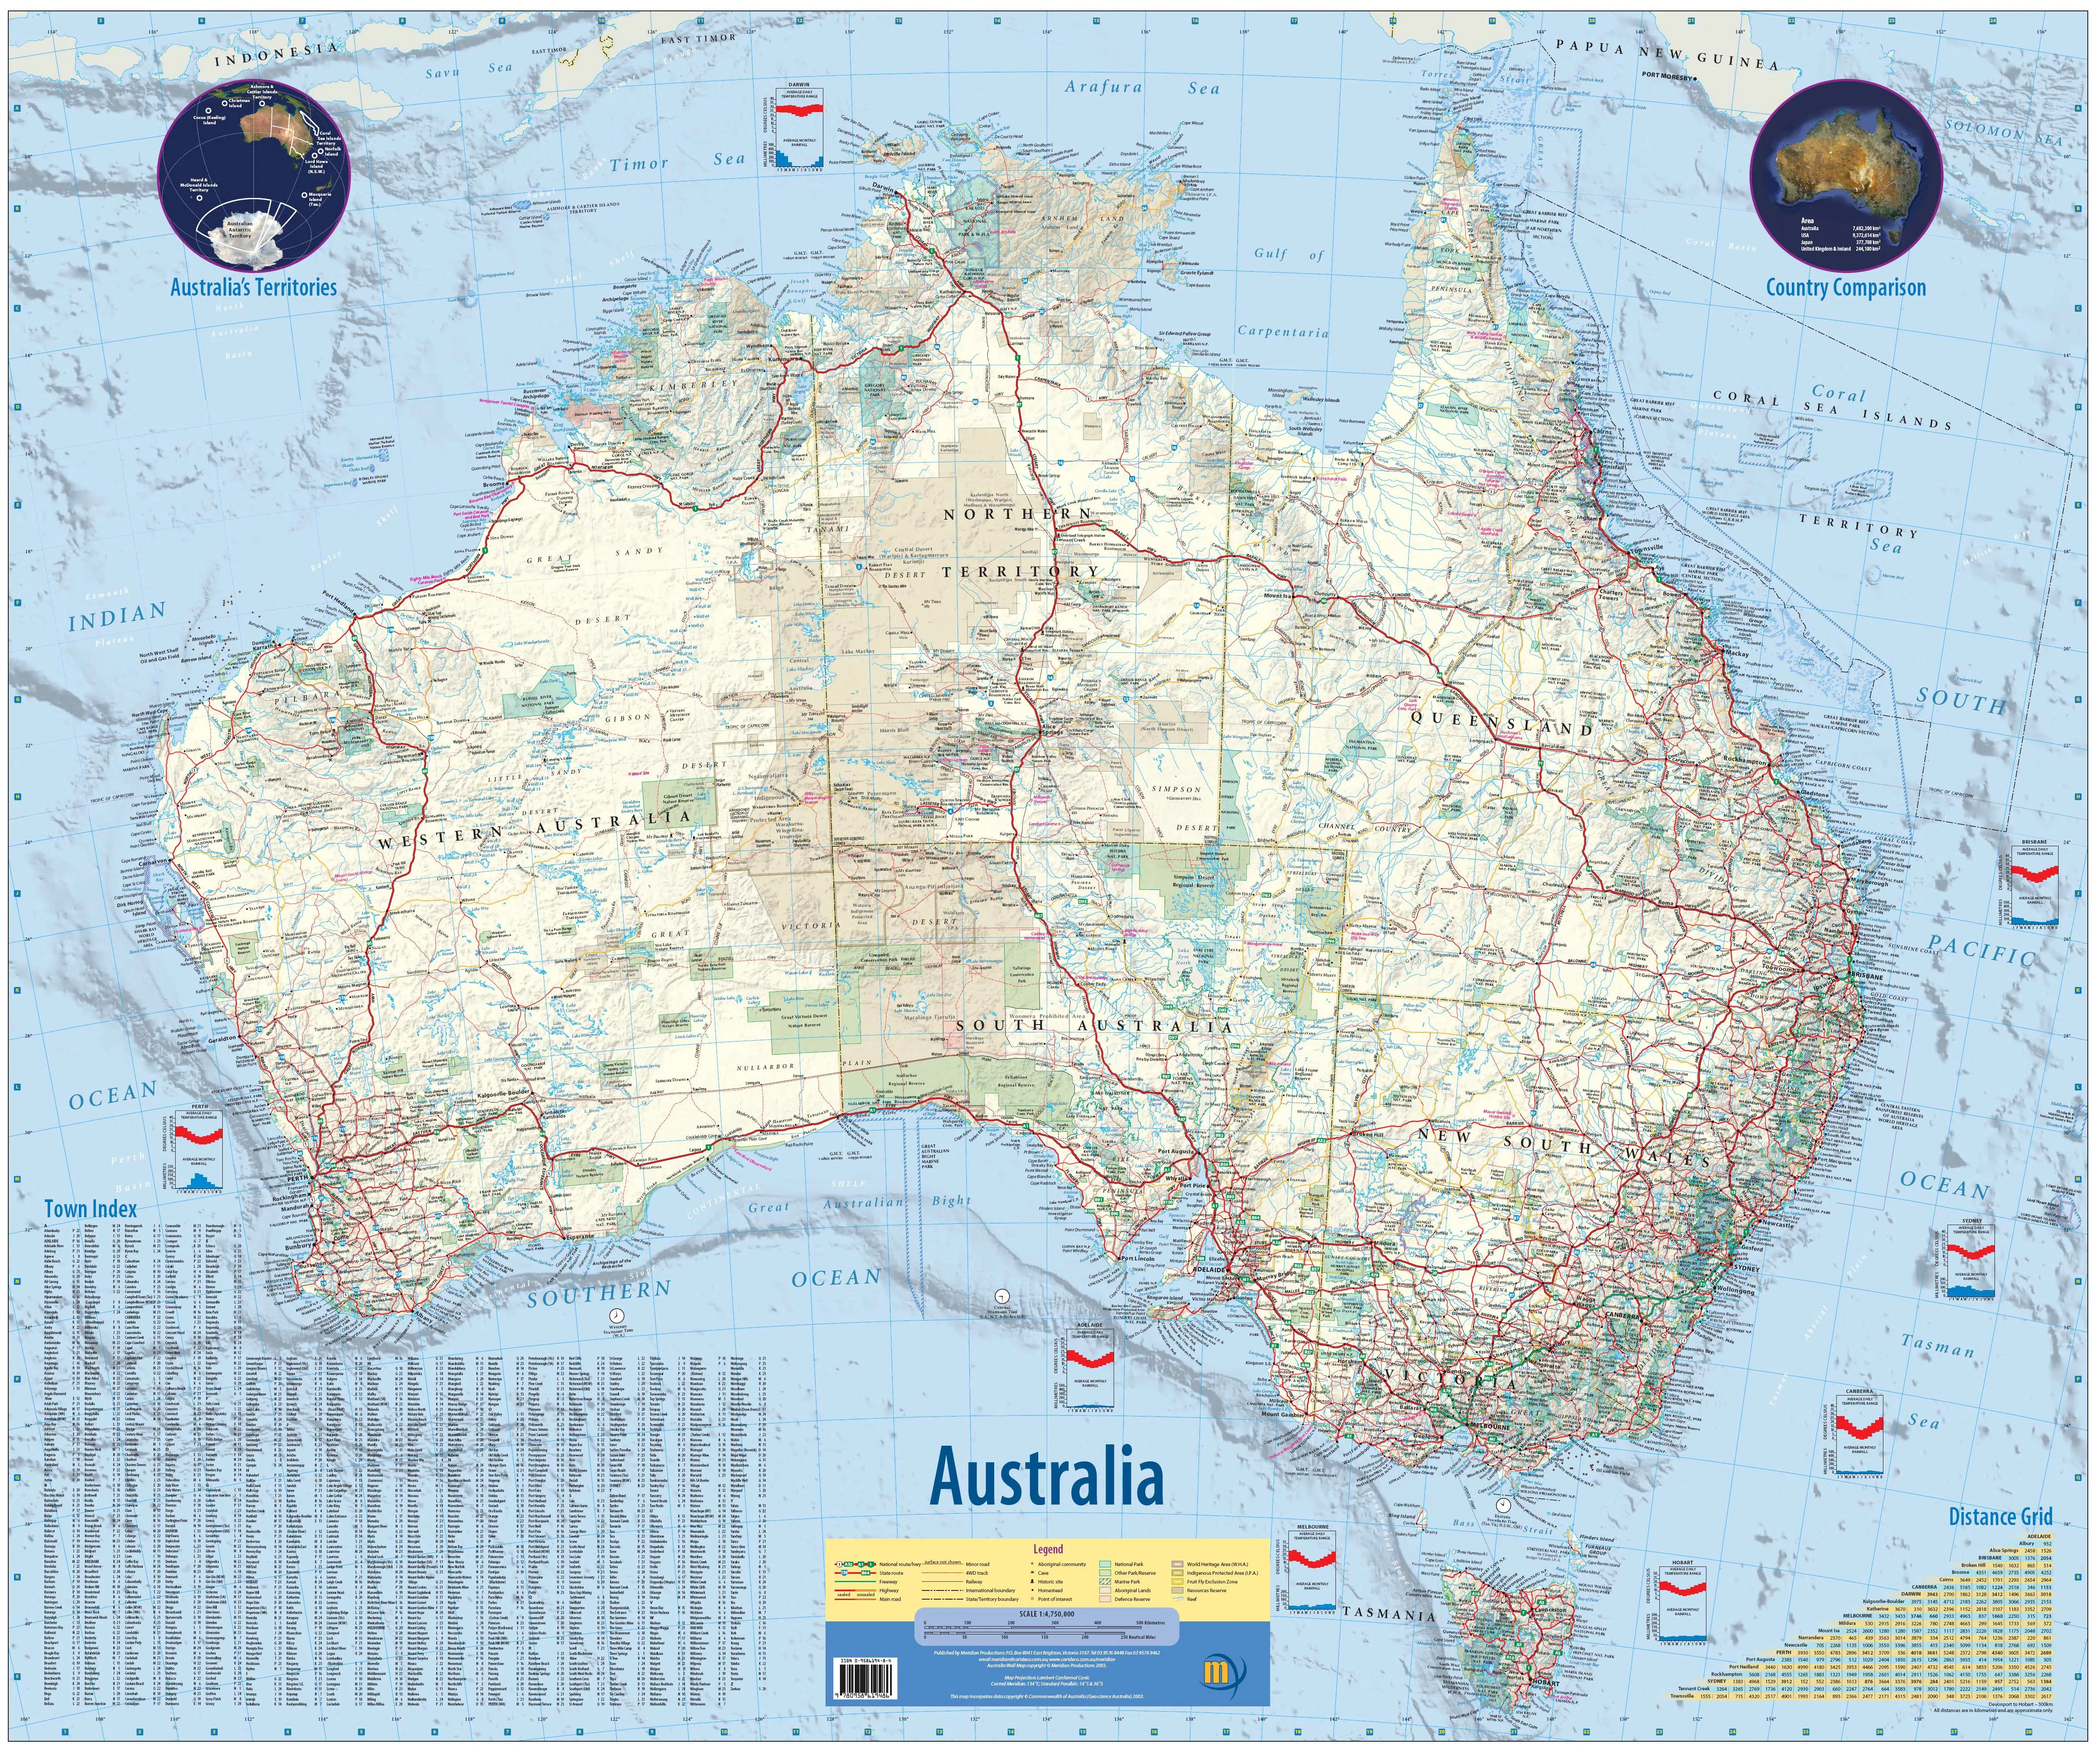 australia-detailed-map-mapsof